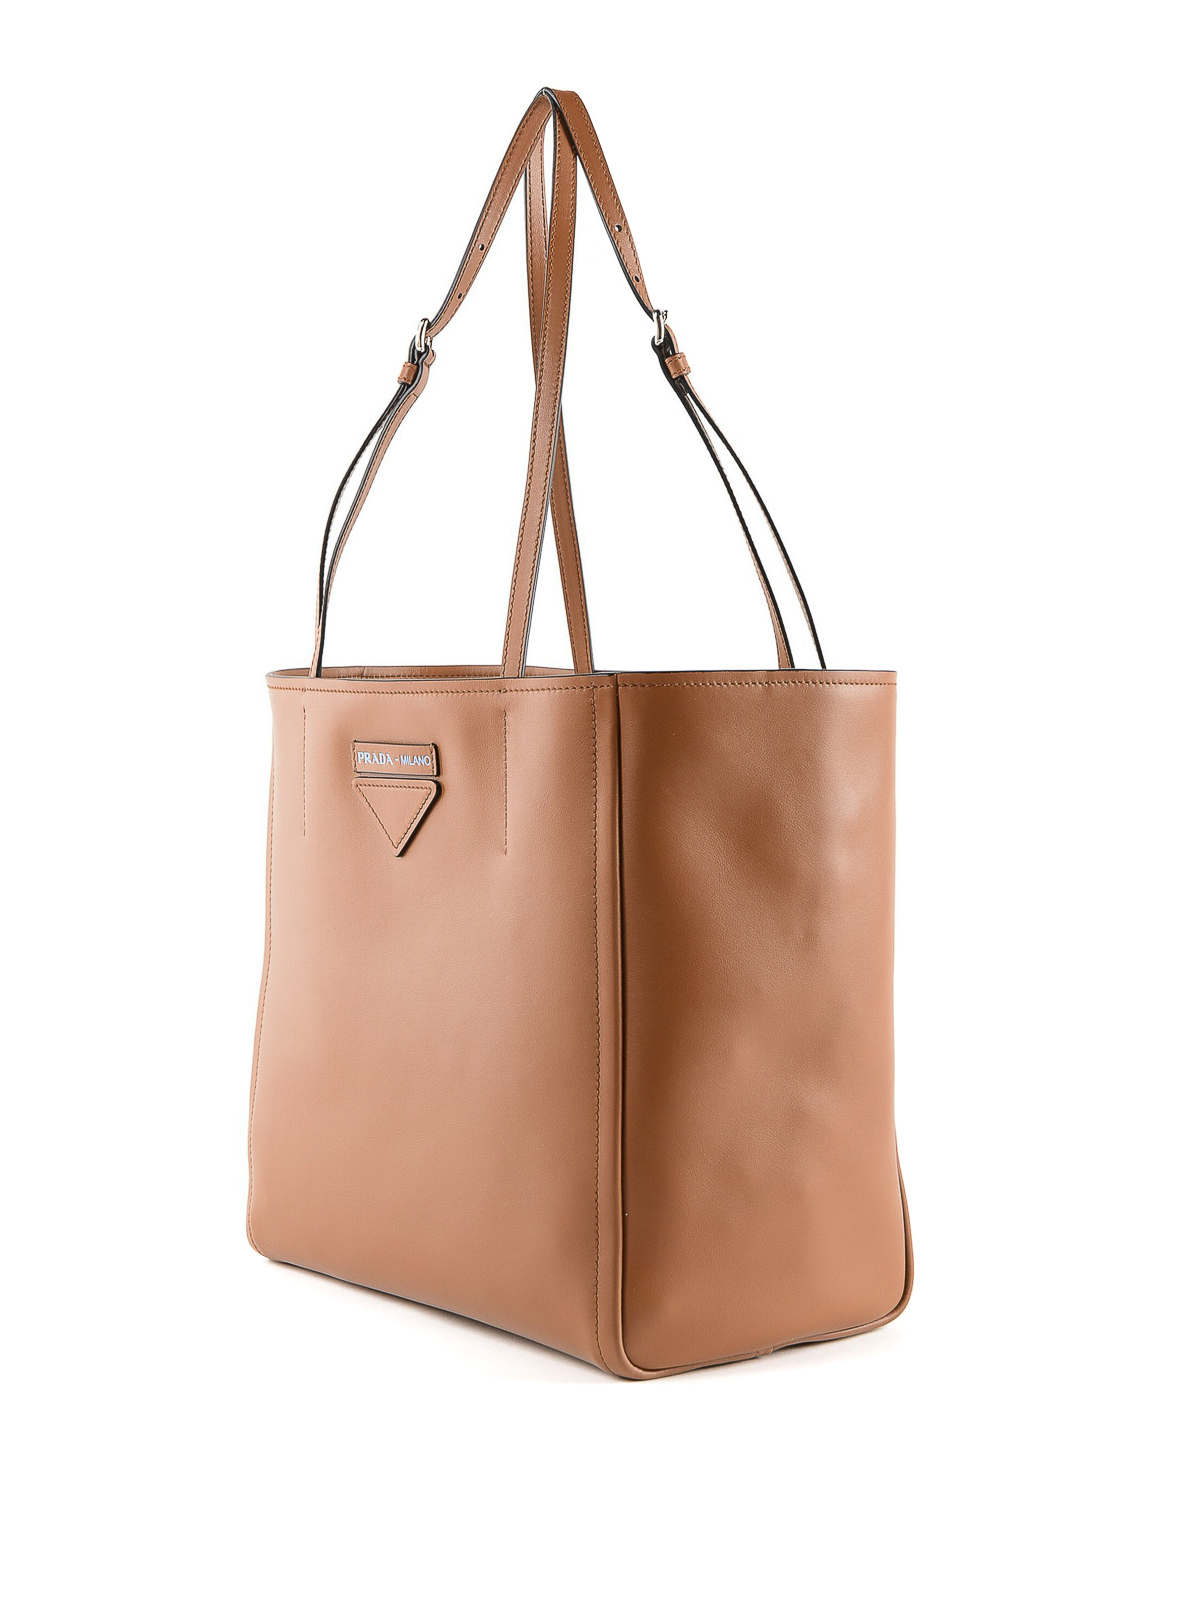 prada concept leather bag